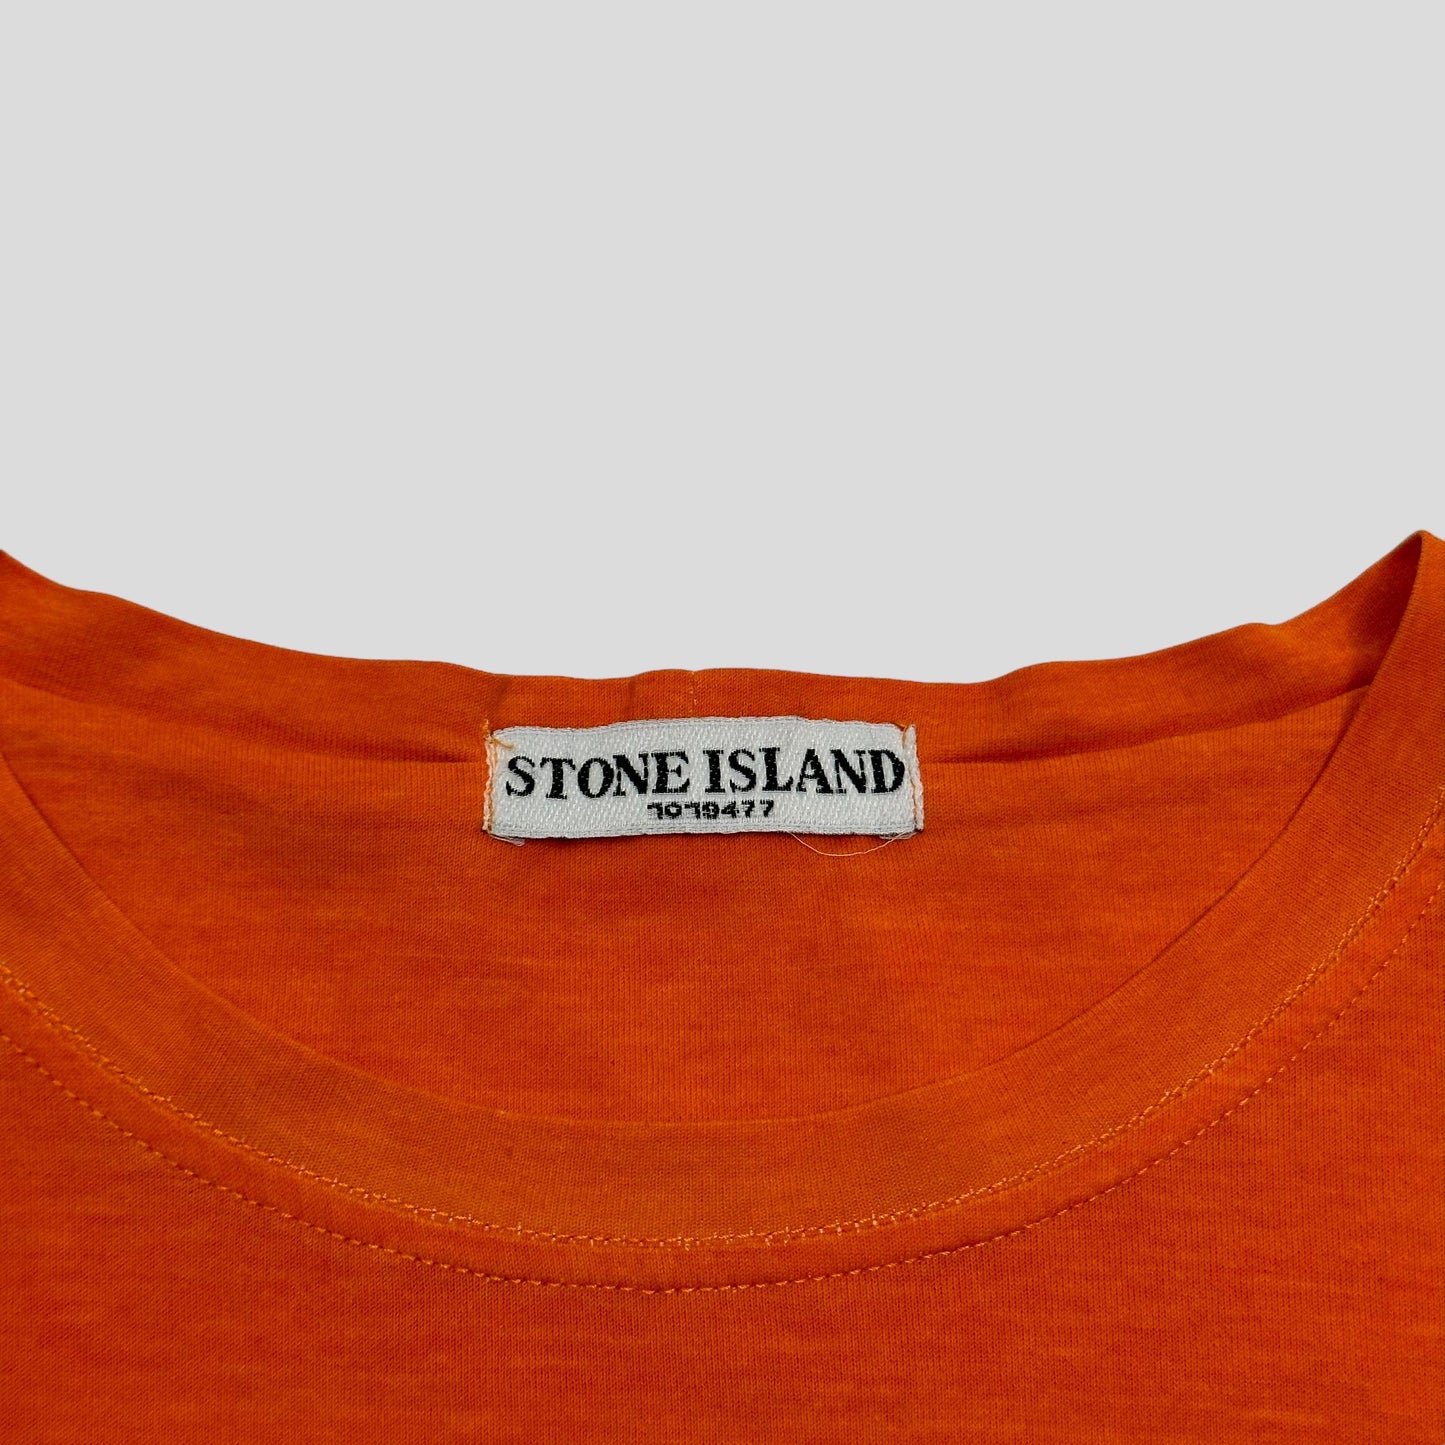 Stone Island SS07 Heather Orange Boxy T-shirt - M - Known Source